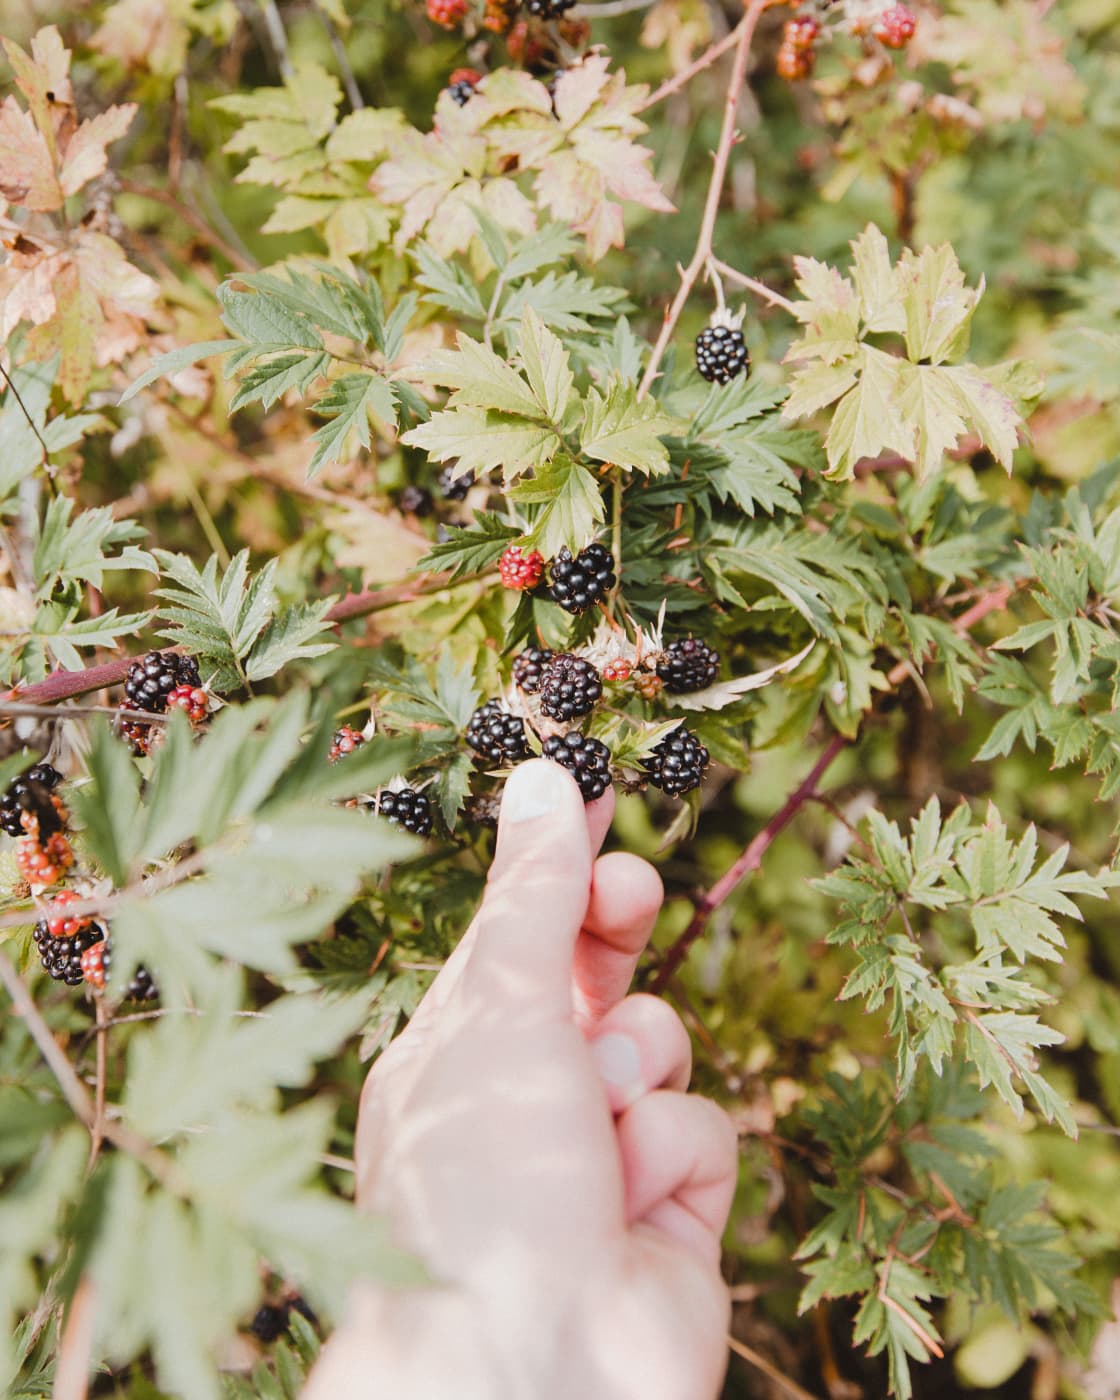 Blackberries on the site!